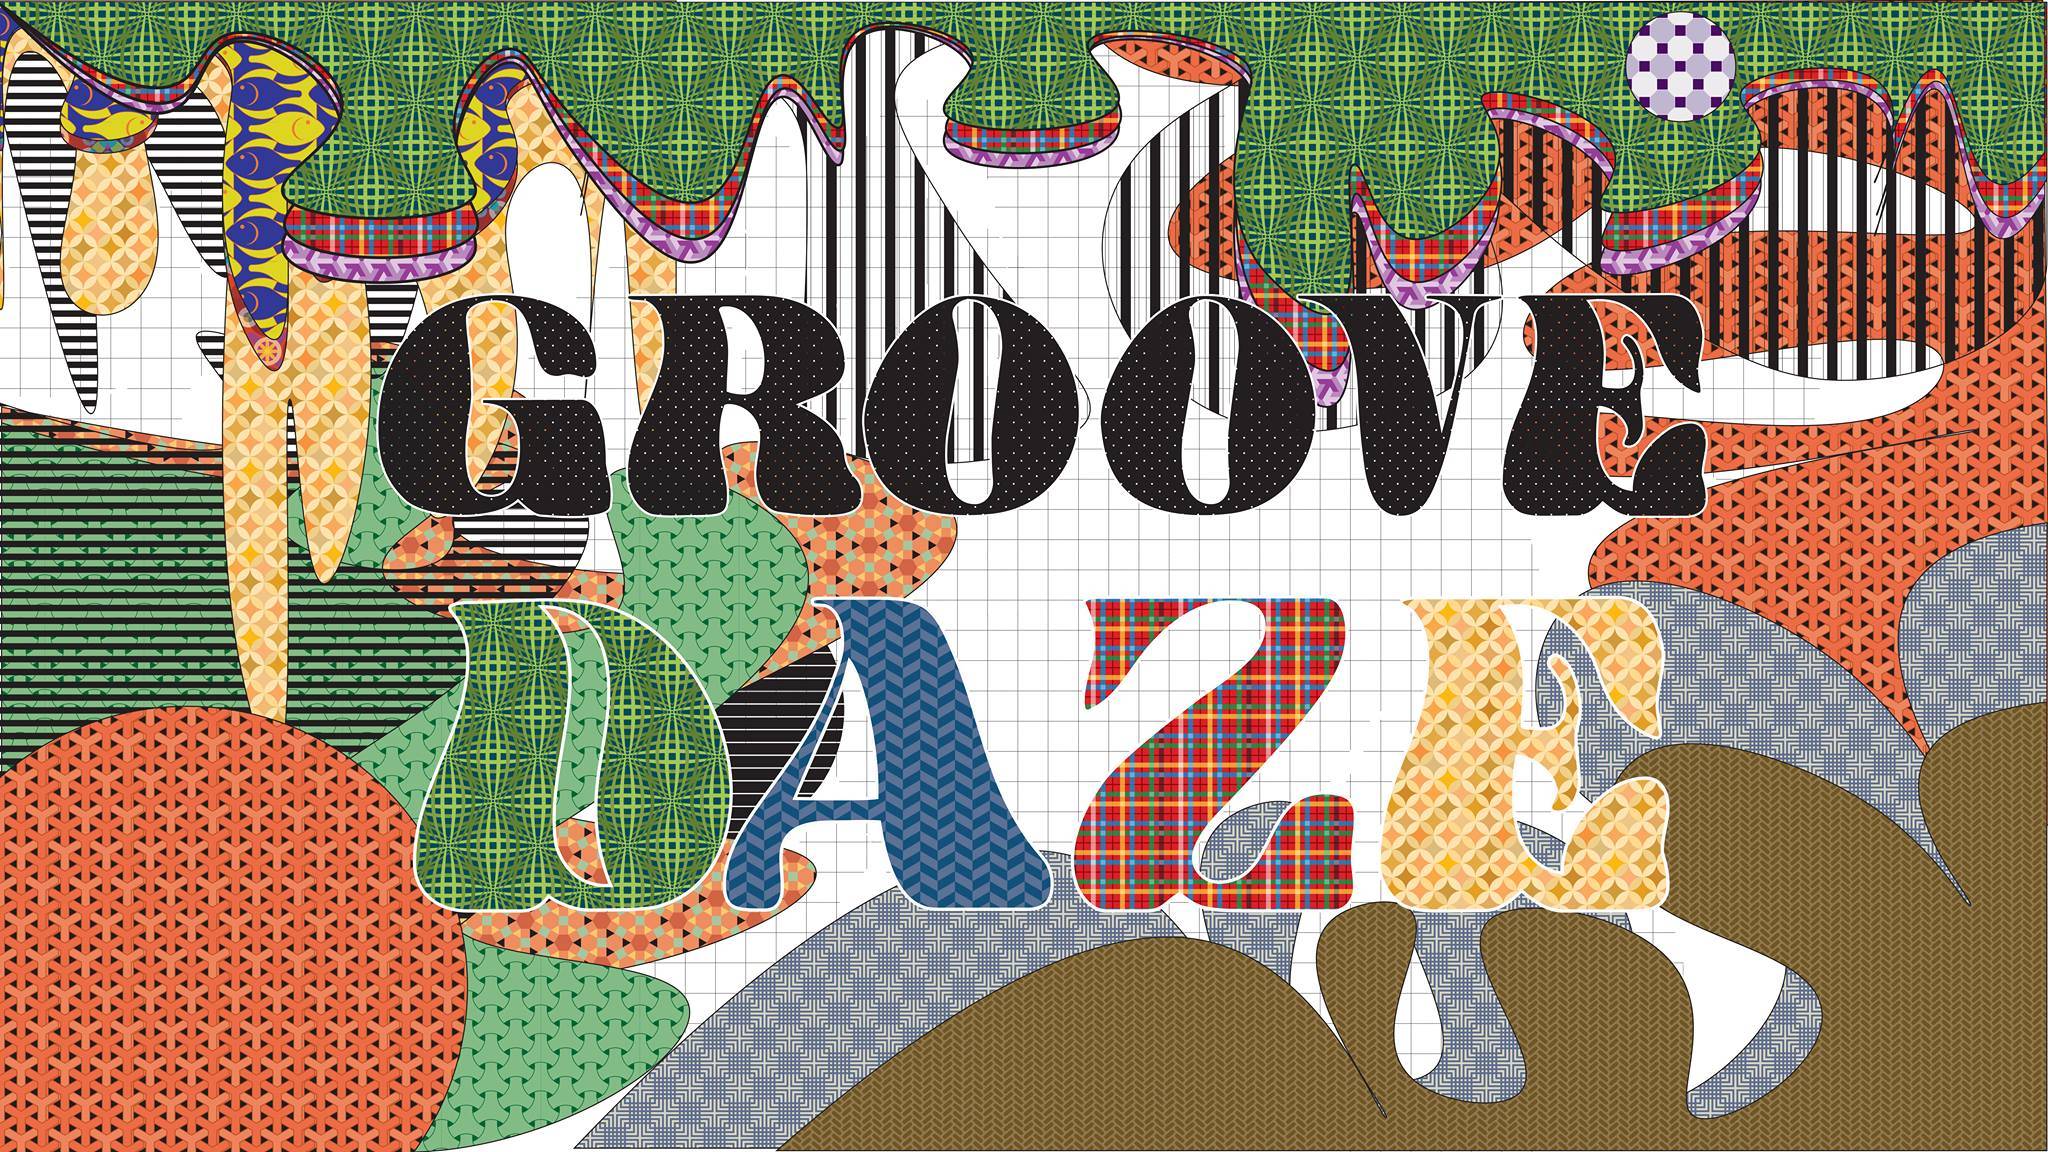 Groove Daze provides a visual platform for U of I artists